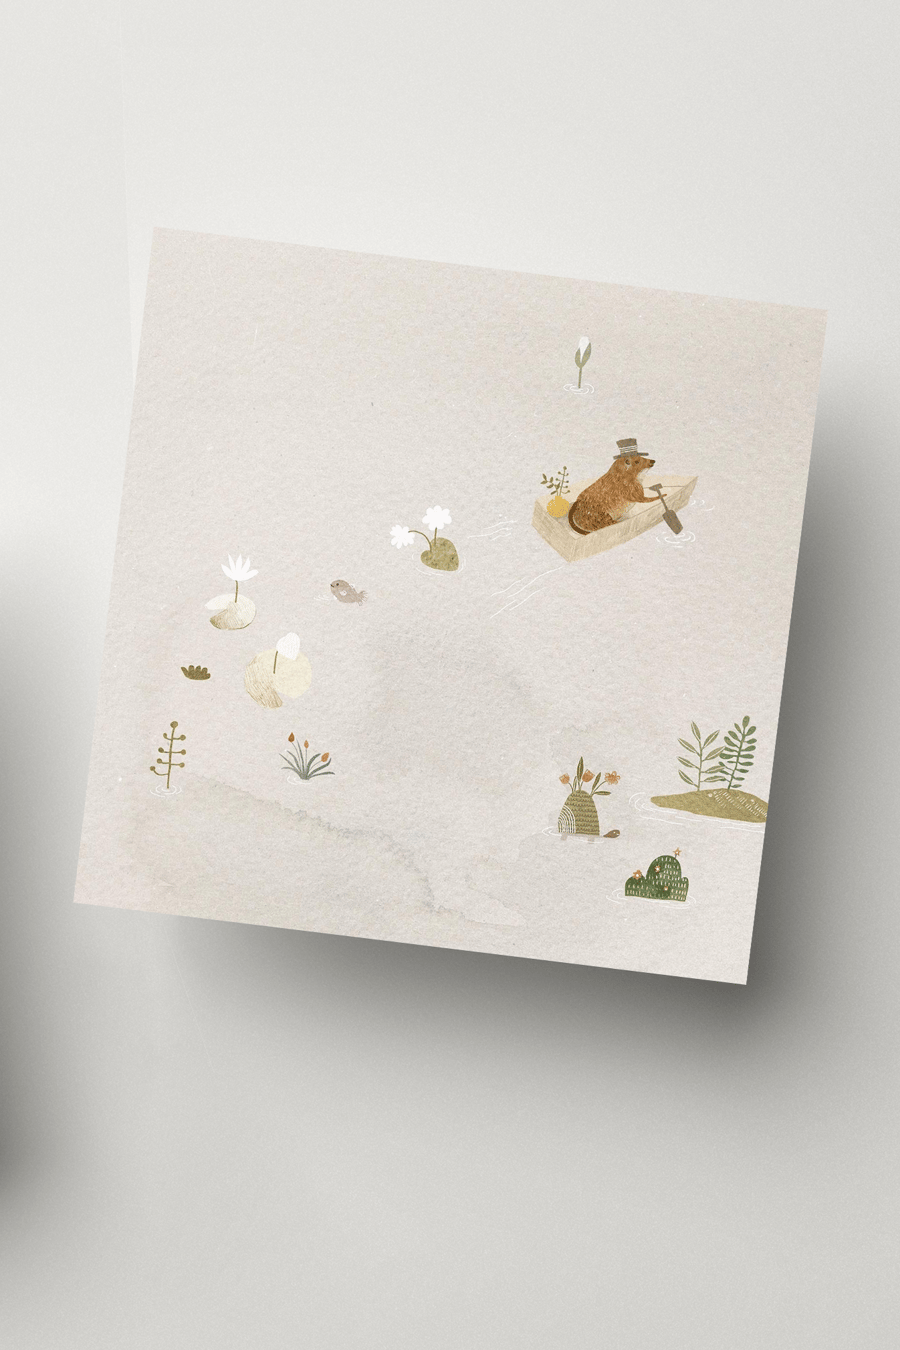 Water Rat Art Print 148mm with Envelope